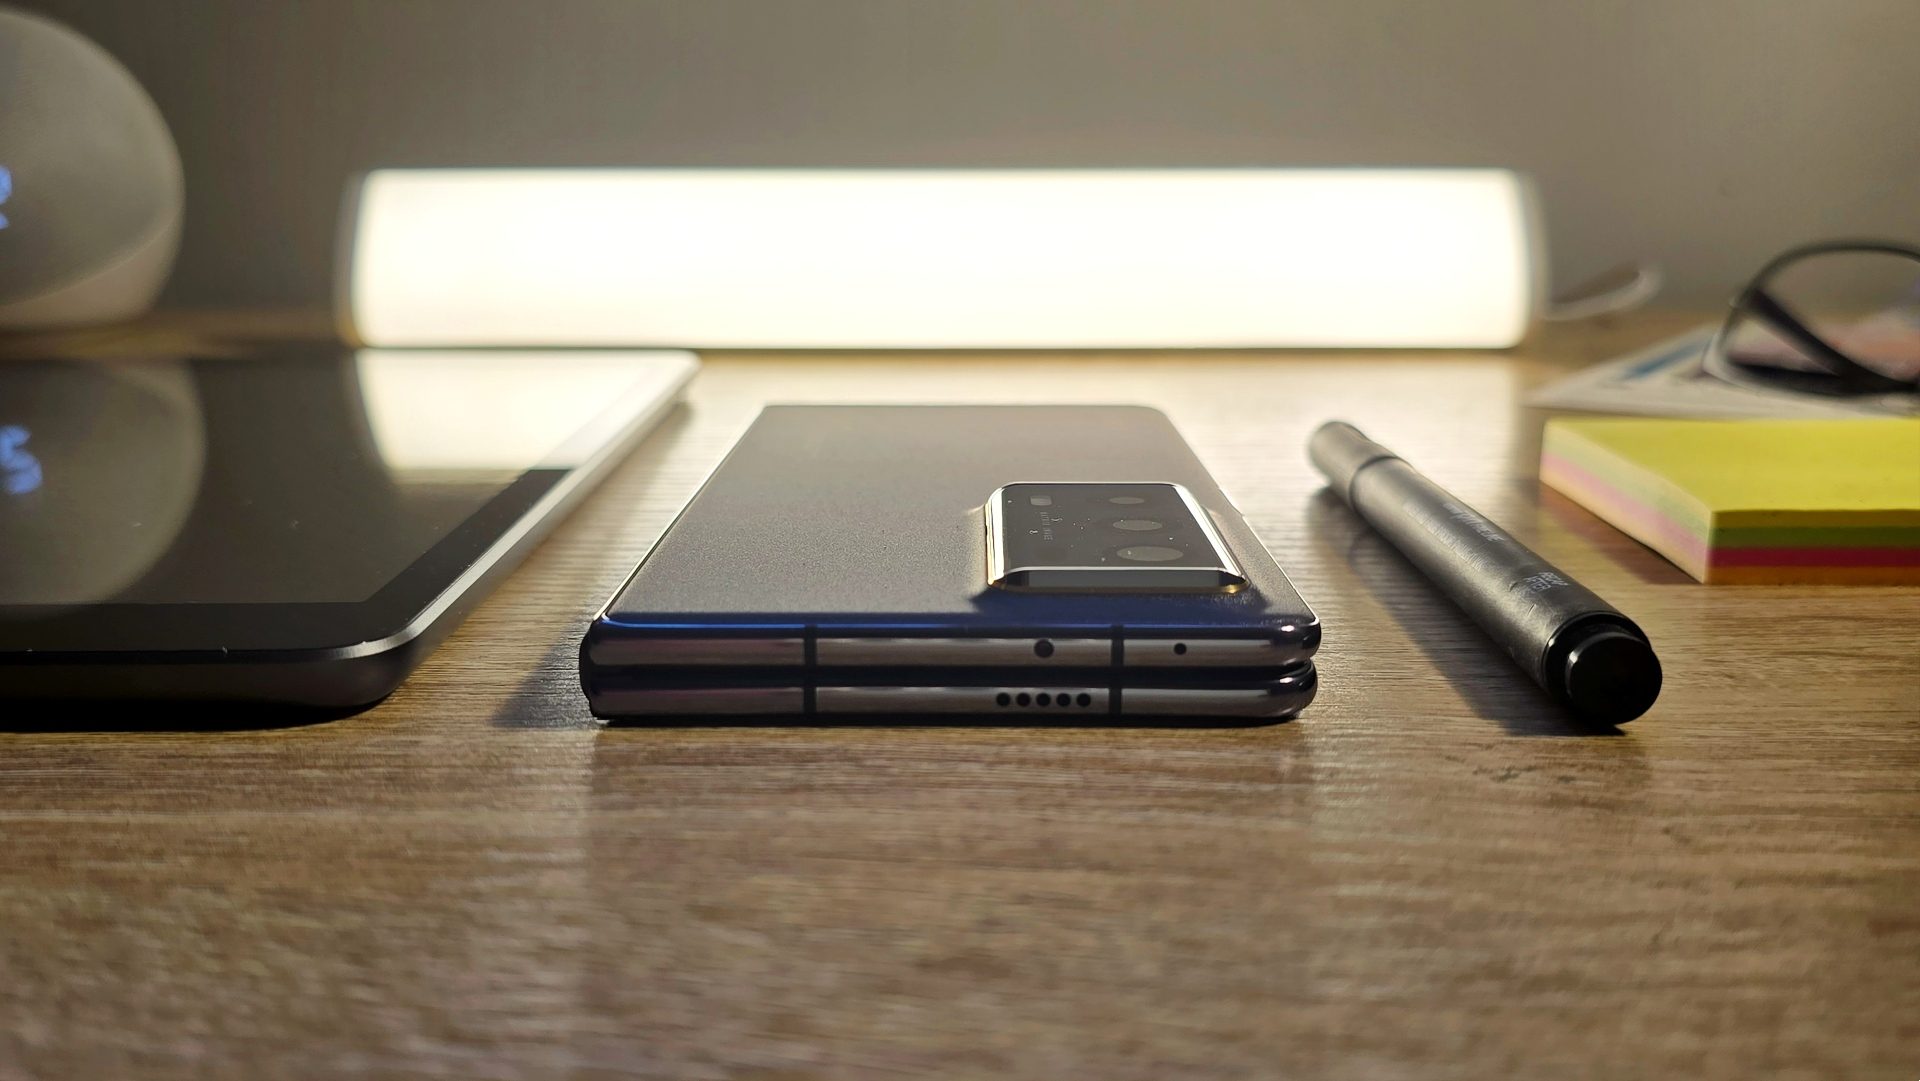 Honor’s ultra sleek Magic V2 foldable phone takes direct aim at Samsung’s Galaxy Fold